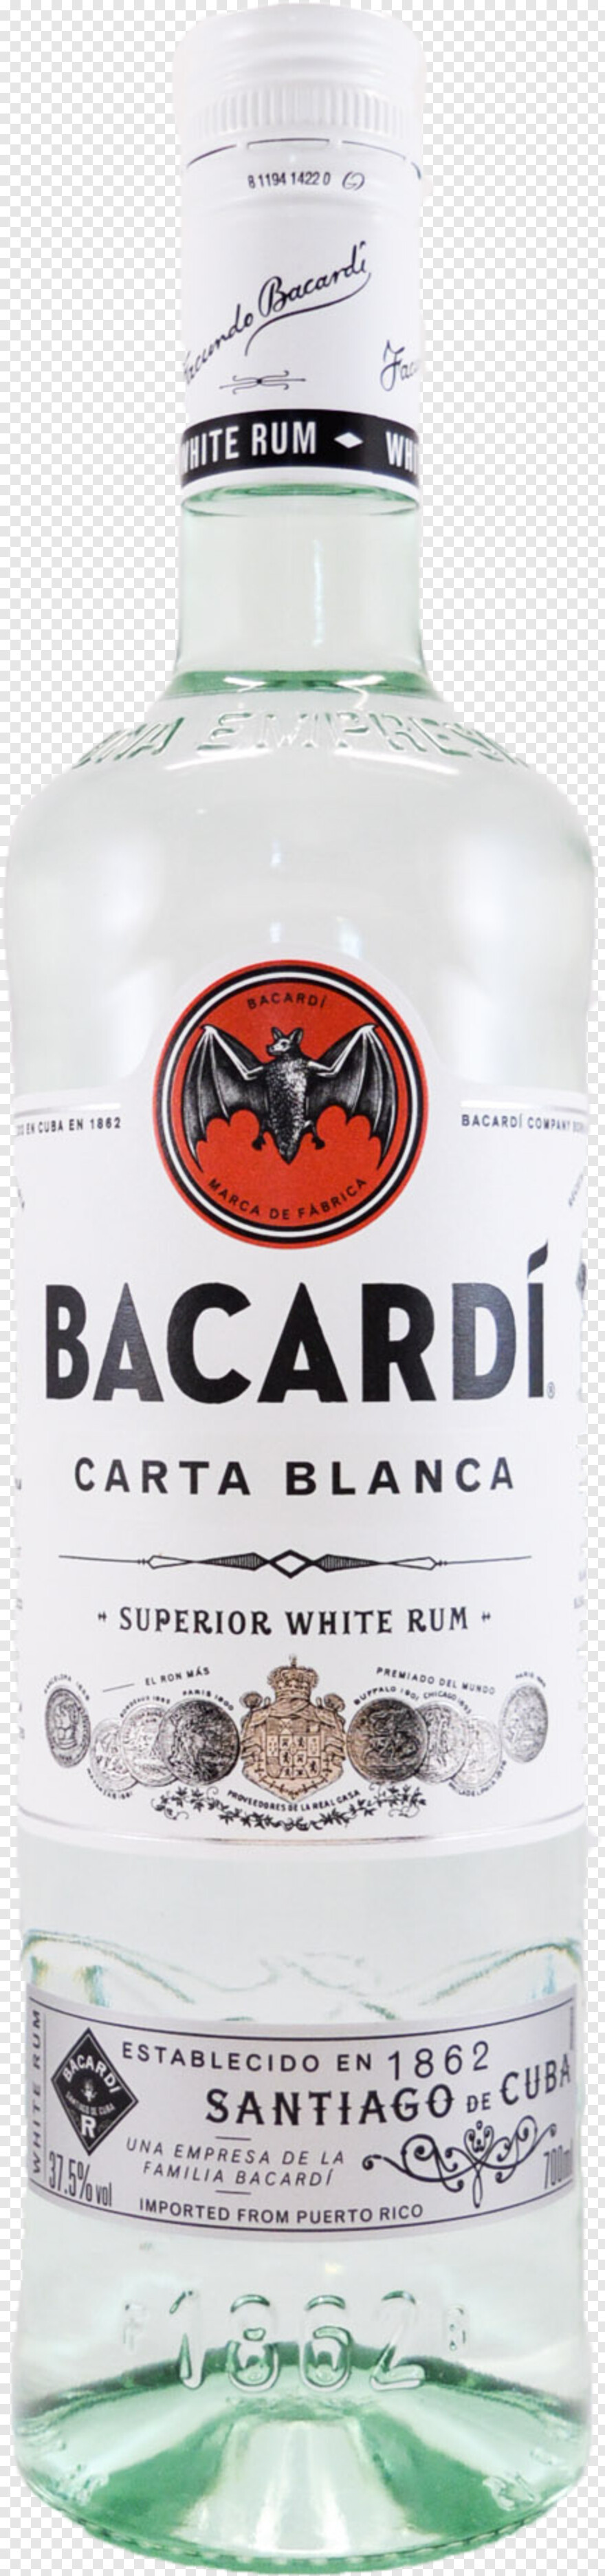 bacardi-logo # 326369